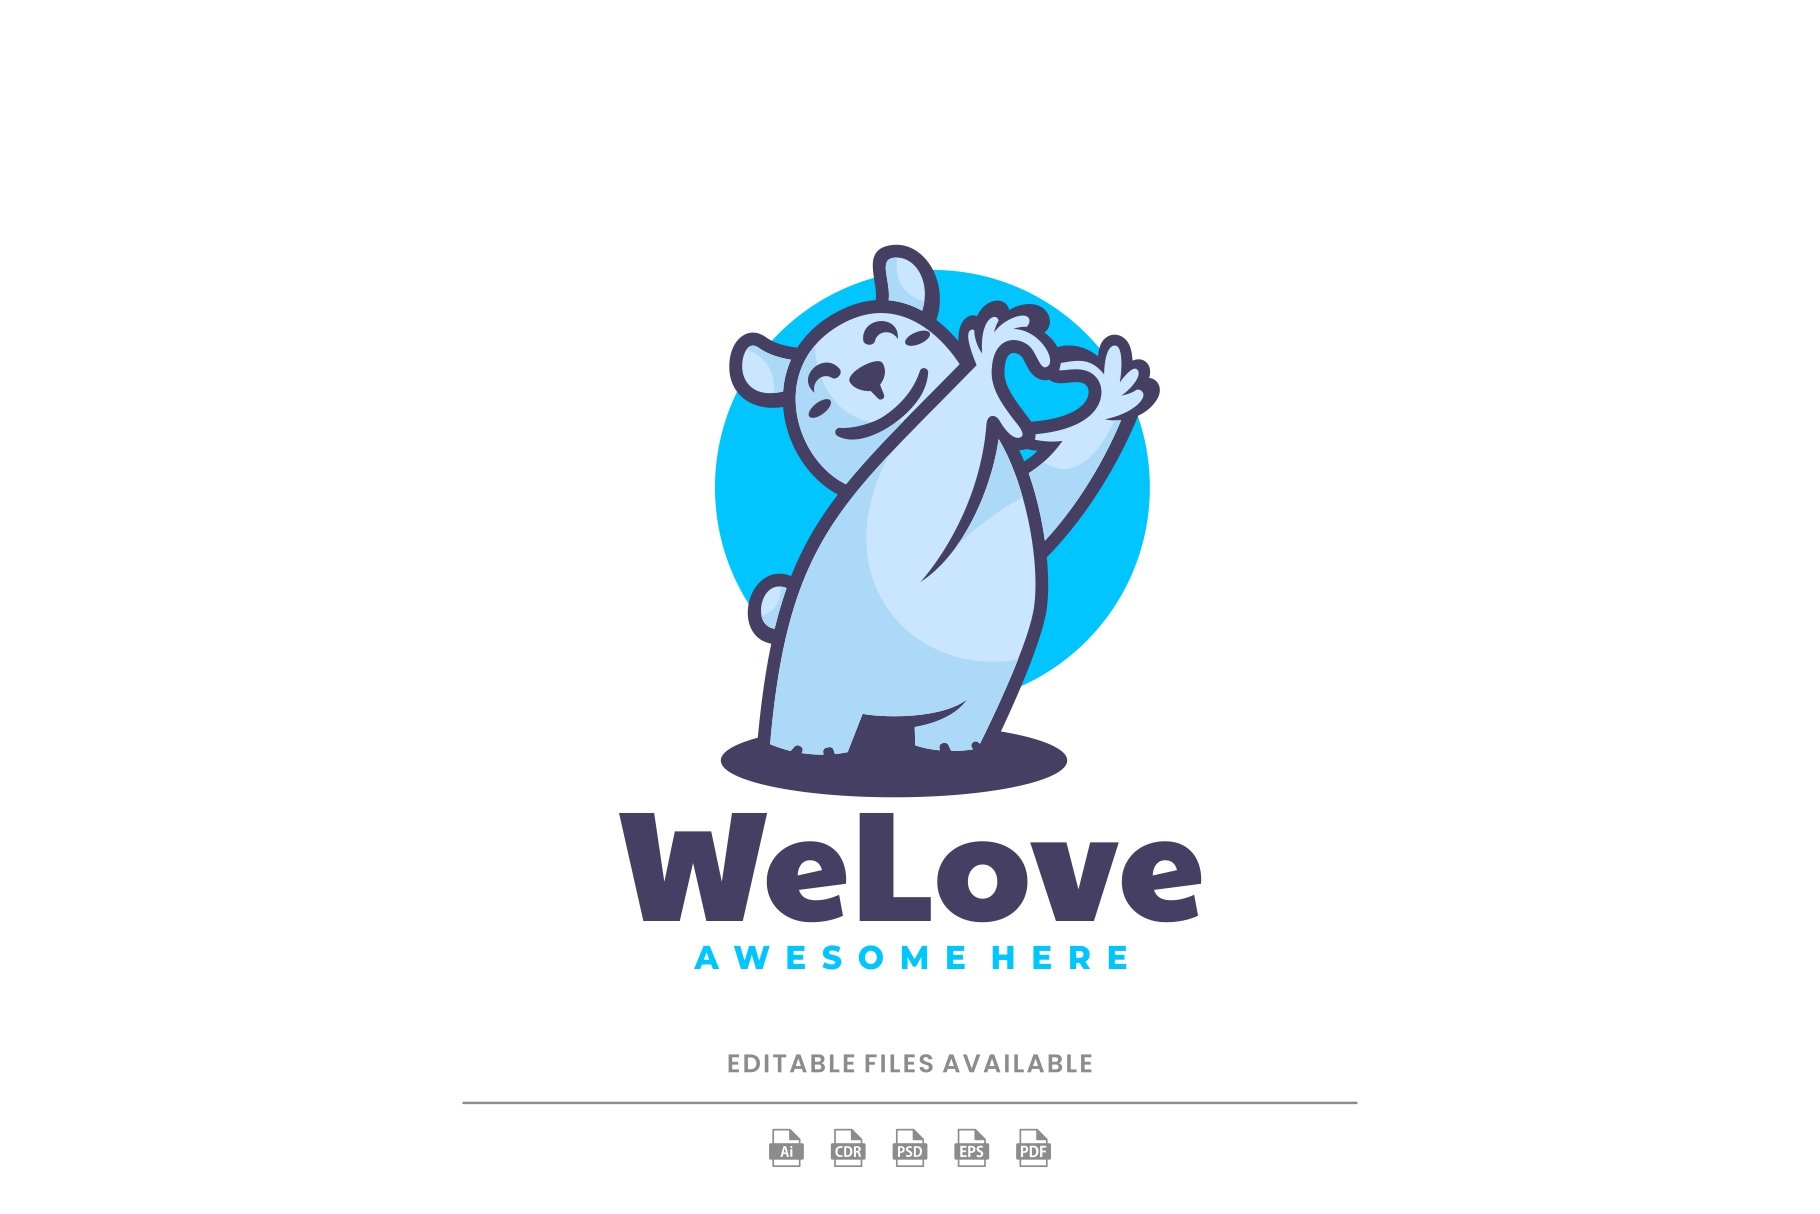 Love Bear Cartoon Logo cover image.